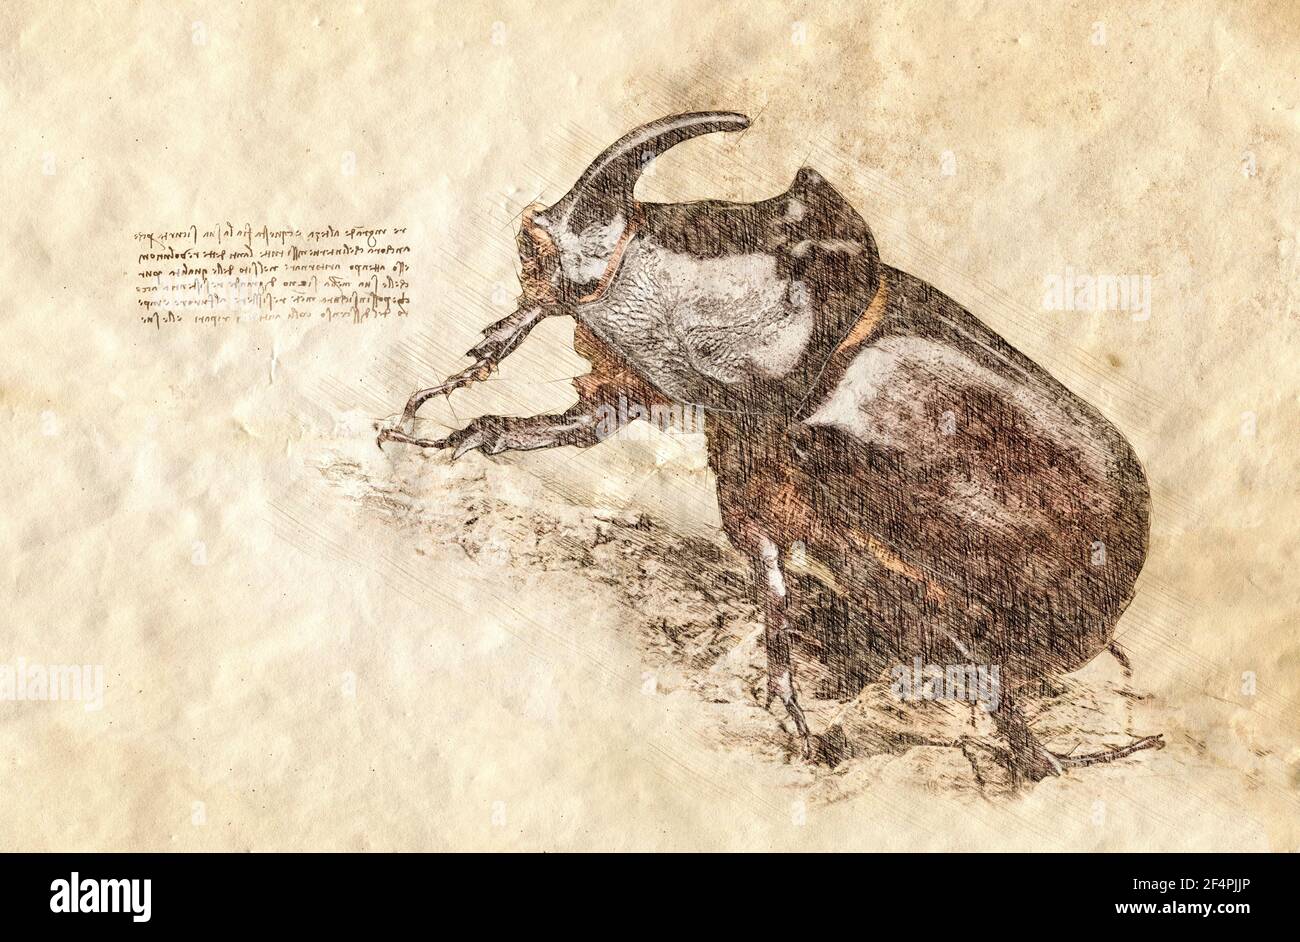 Skizze eines Nashornkäfer - Arthropoda. Digitale Skizze. Stockfoto